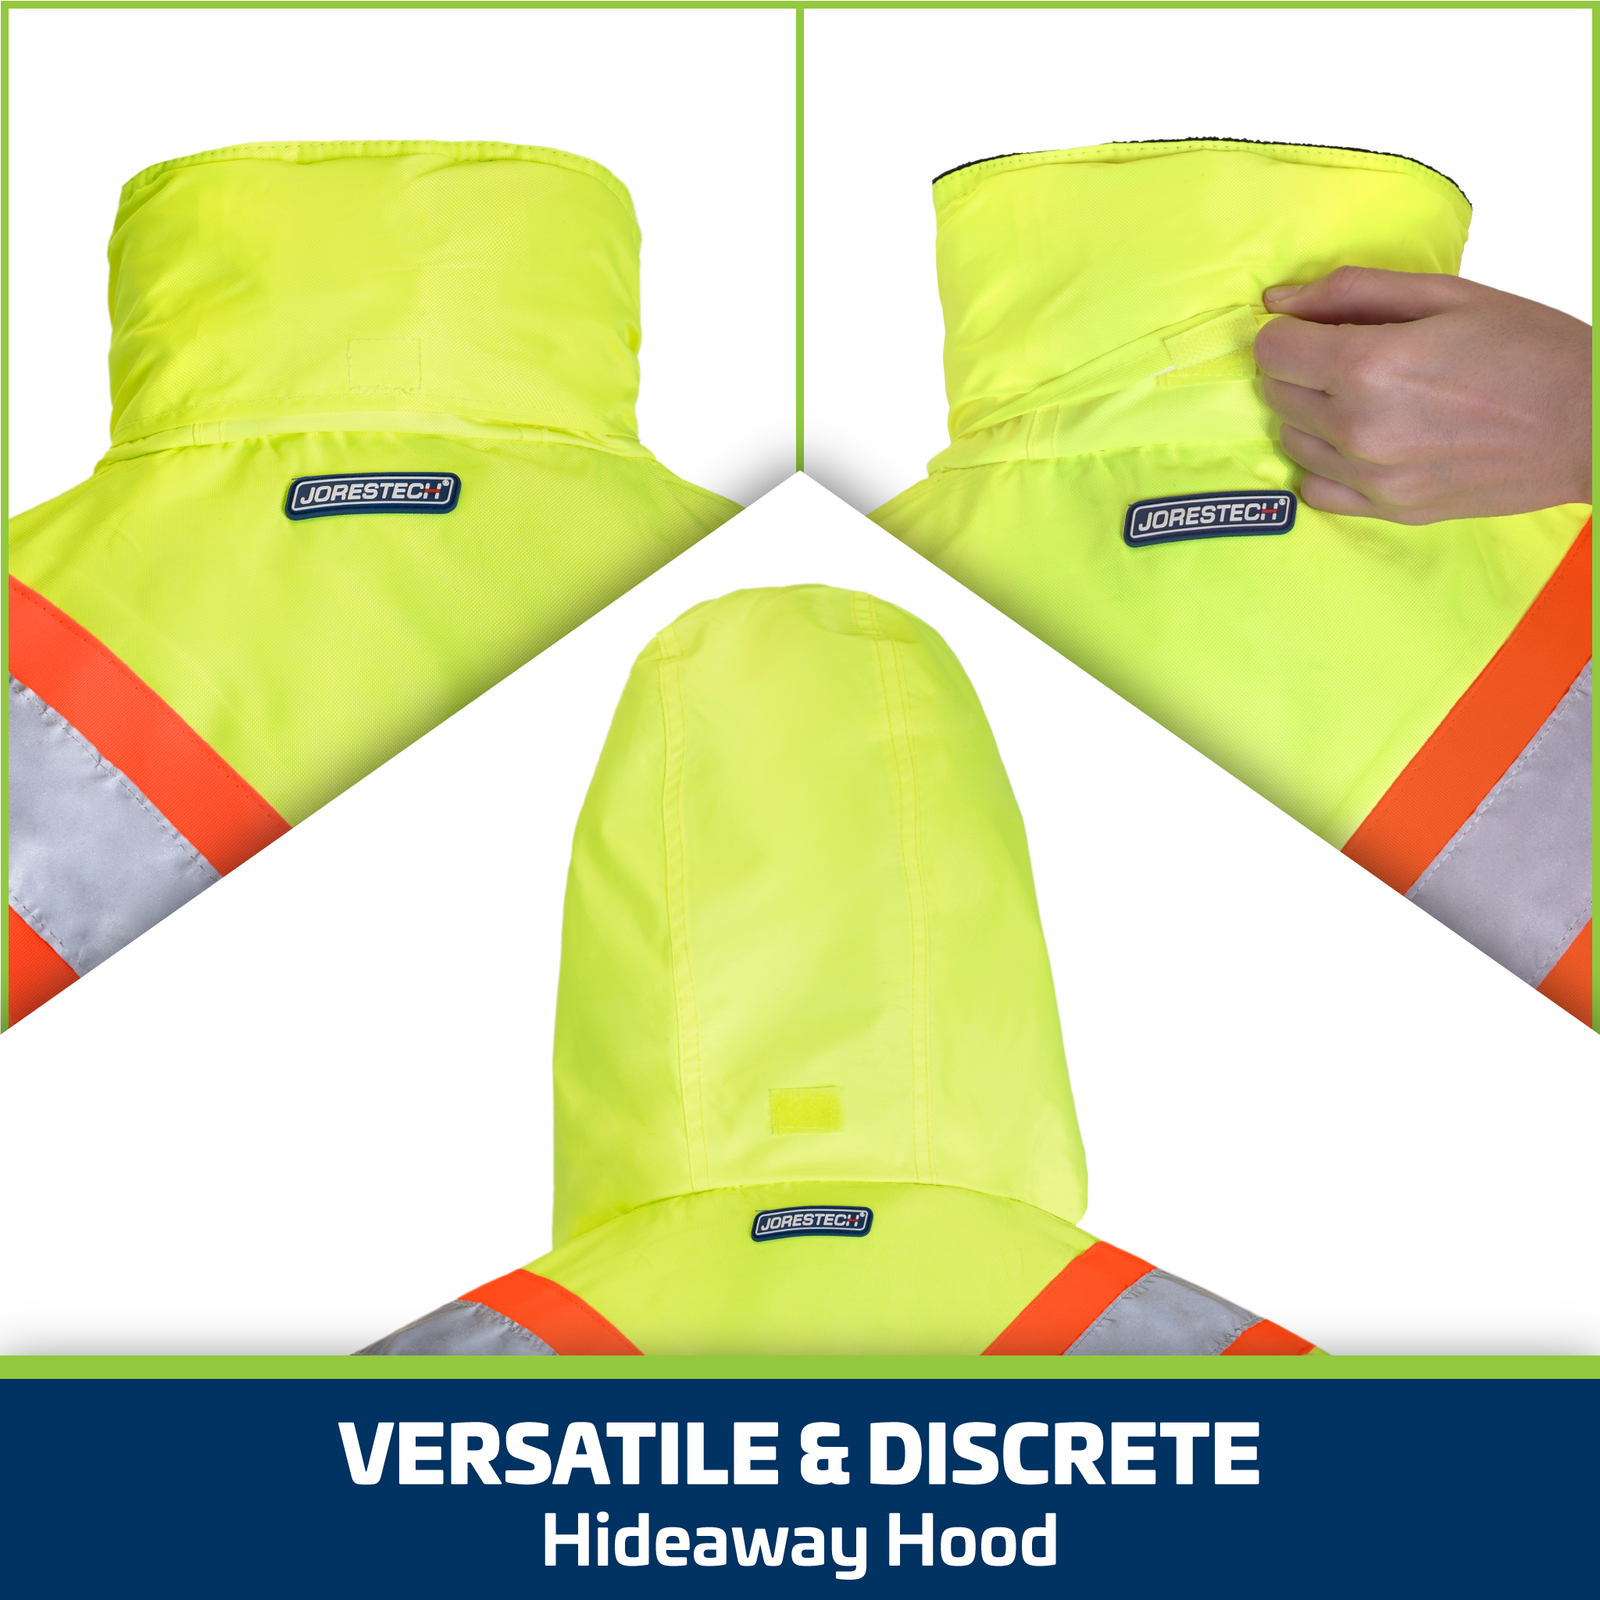 JORESTECH waterproof safety jacket with versatile and discrete hideaway hood